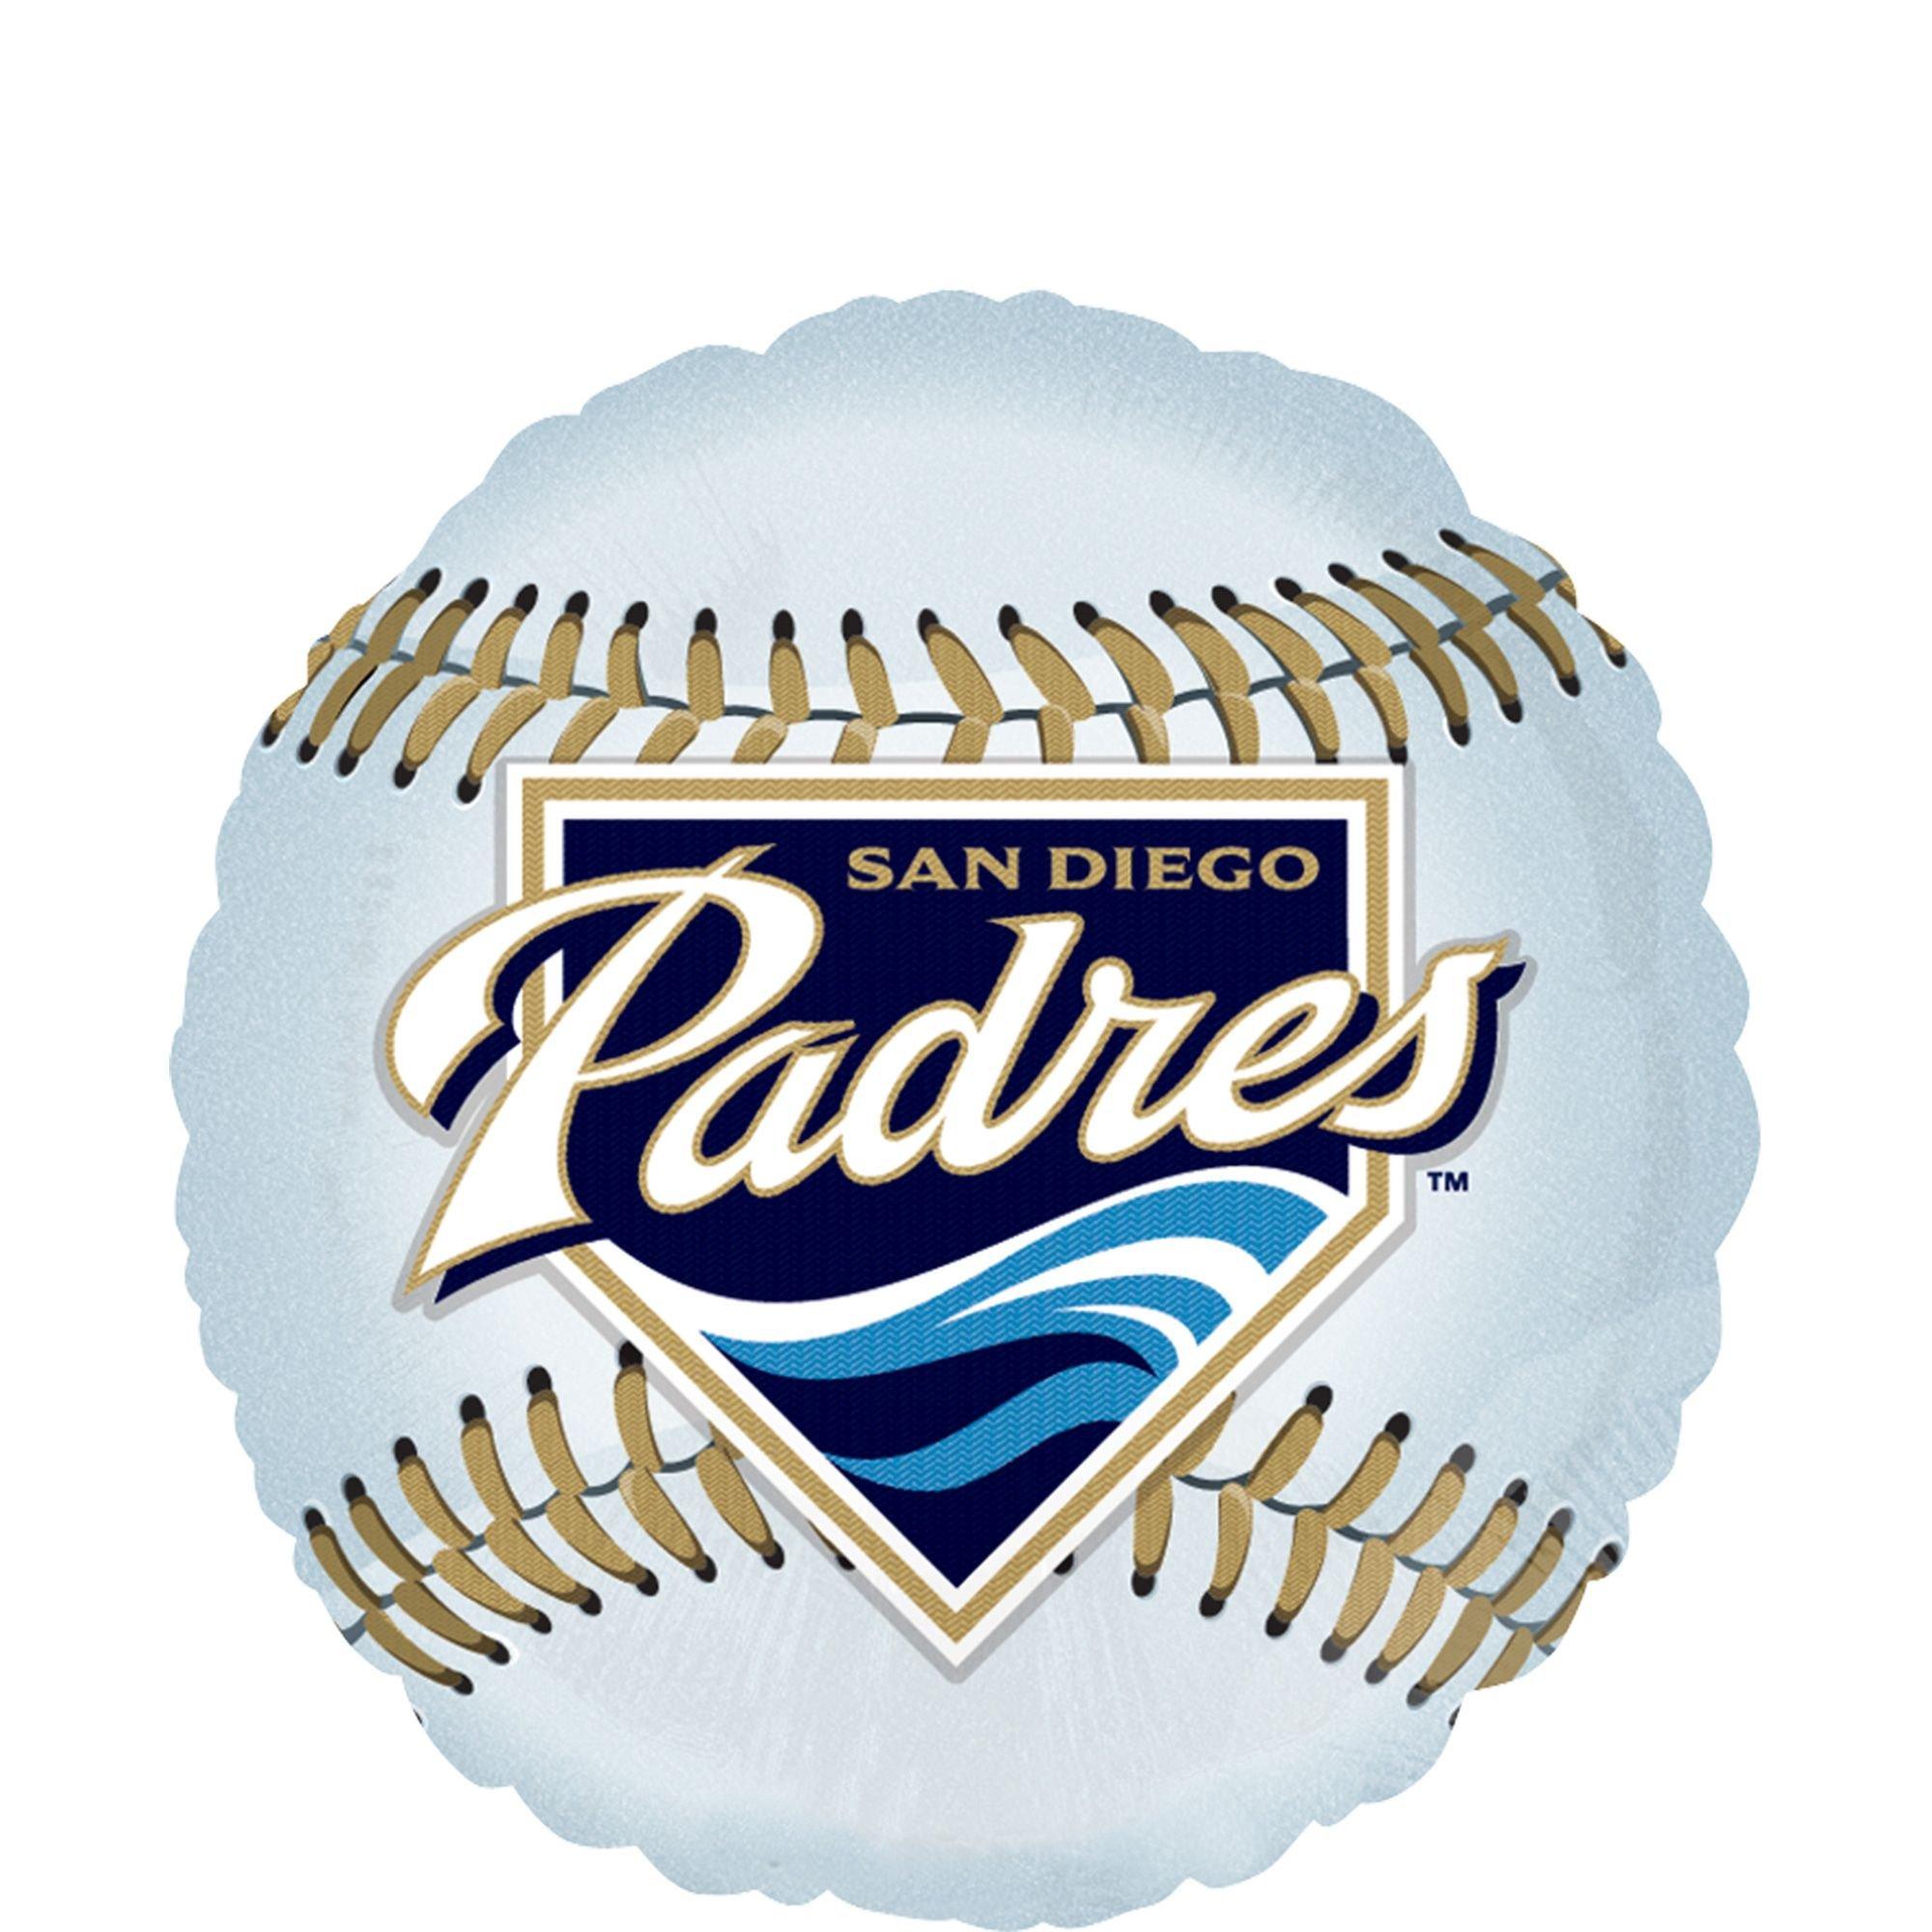 padres logo baseball